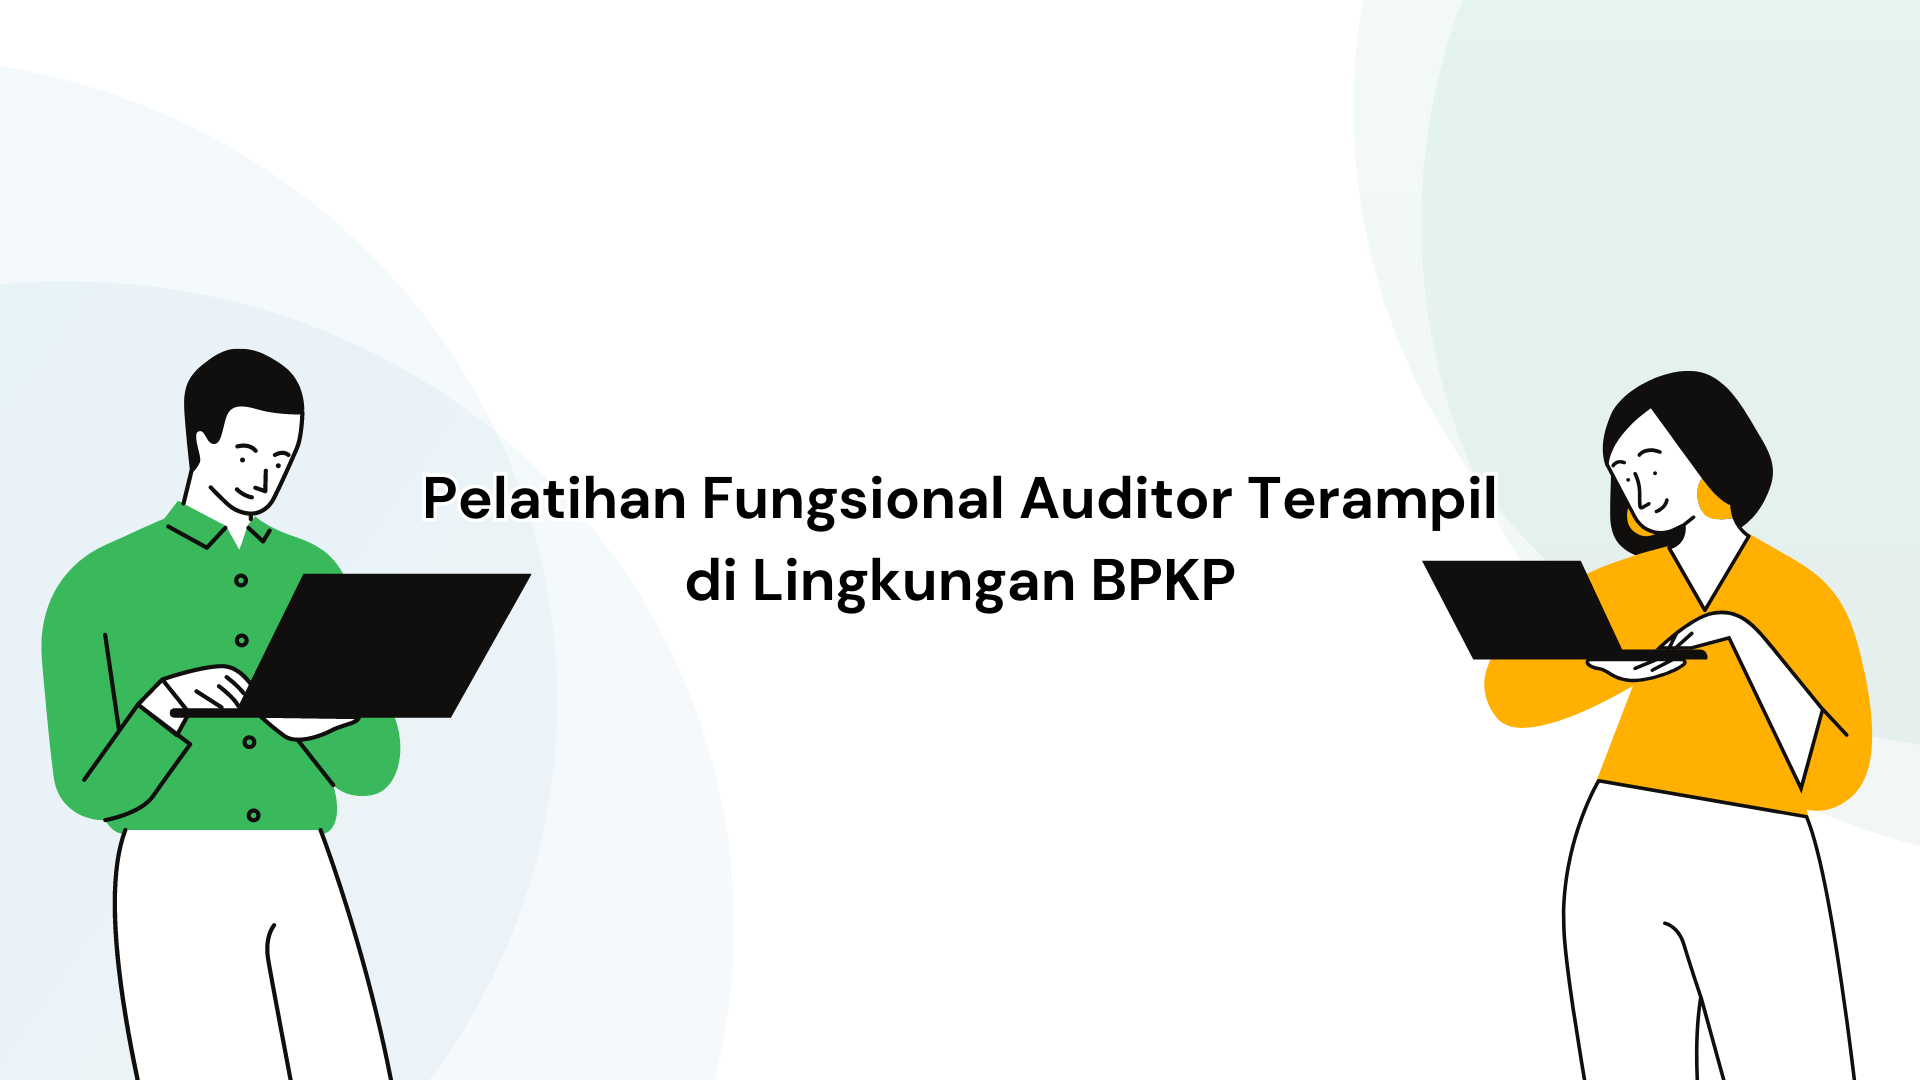 Fungsonal Auditor Terampil BPKP | 0678 A